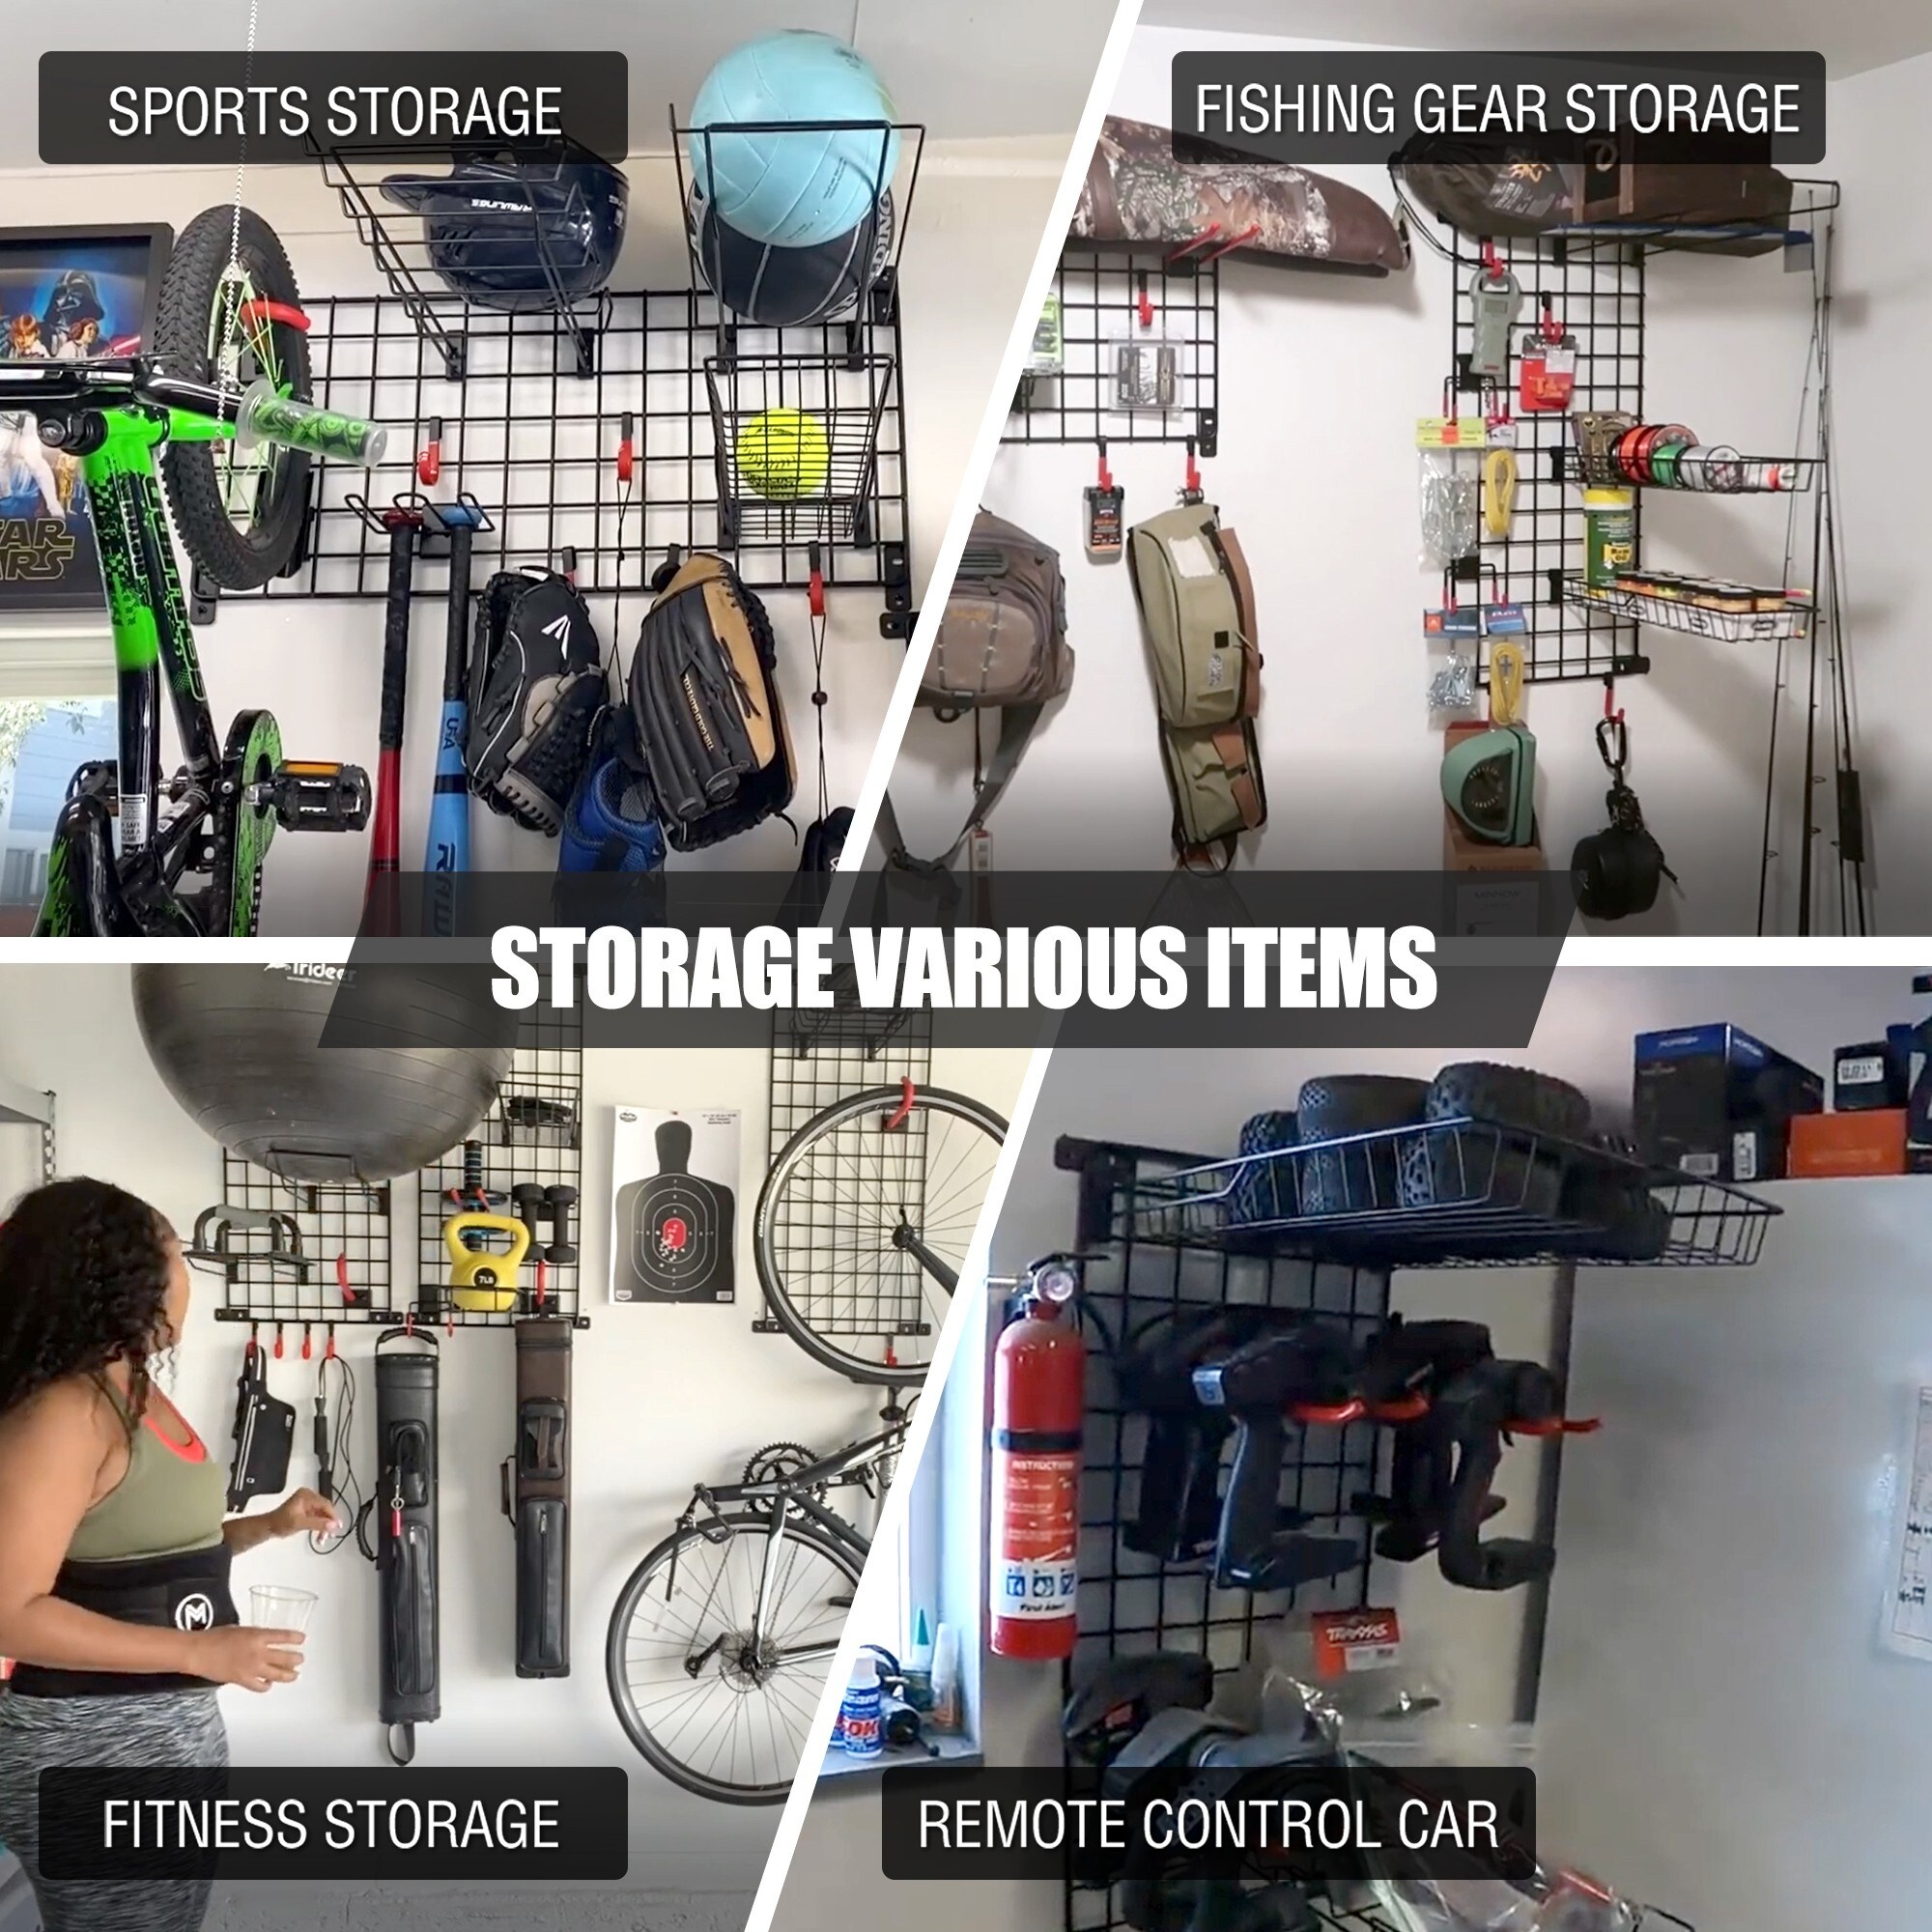 https://ak1.ostkcdn.com/images/products/is/images/direct/01161fa30f5cd9dab6dcaf50bdbf633dd8629774/Mythinglogic-Sports-Equipment-Storage-System%2C-Wall-Mount-Garage-Storage-Shelves.jpg